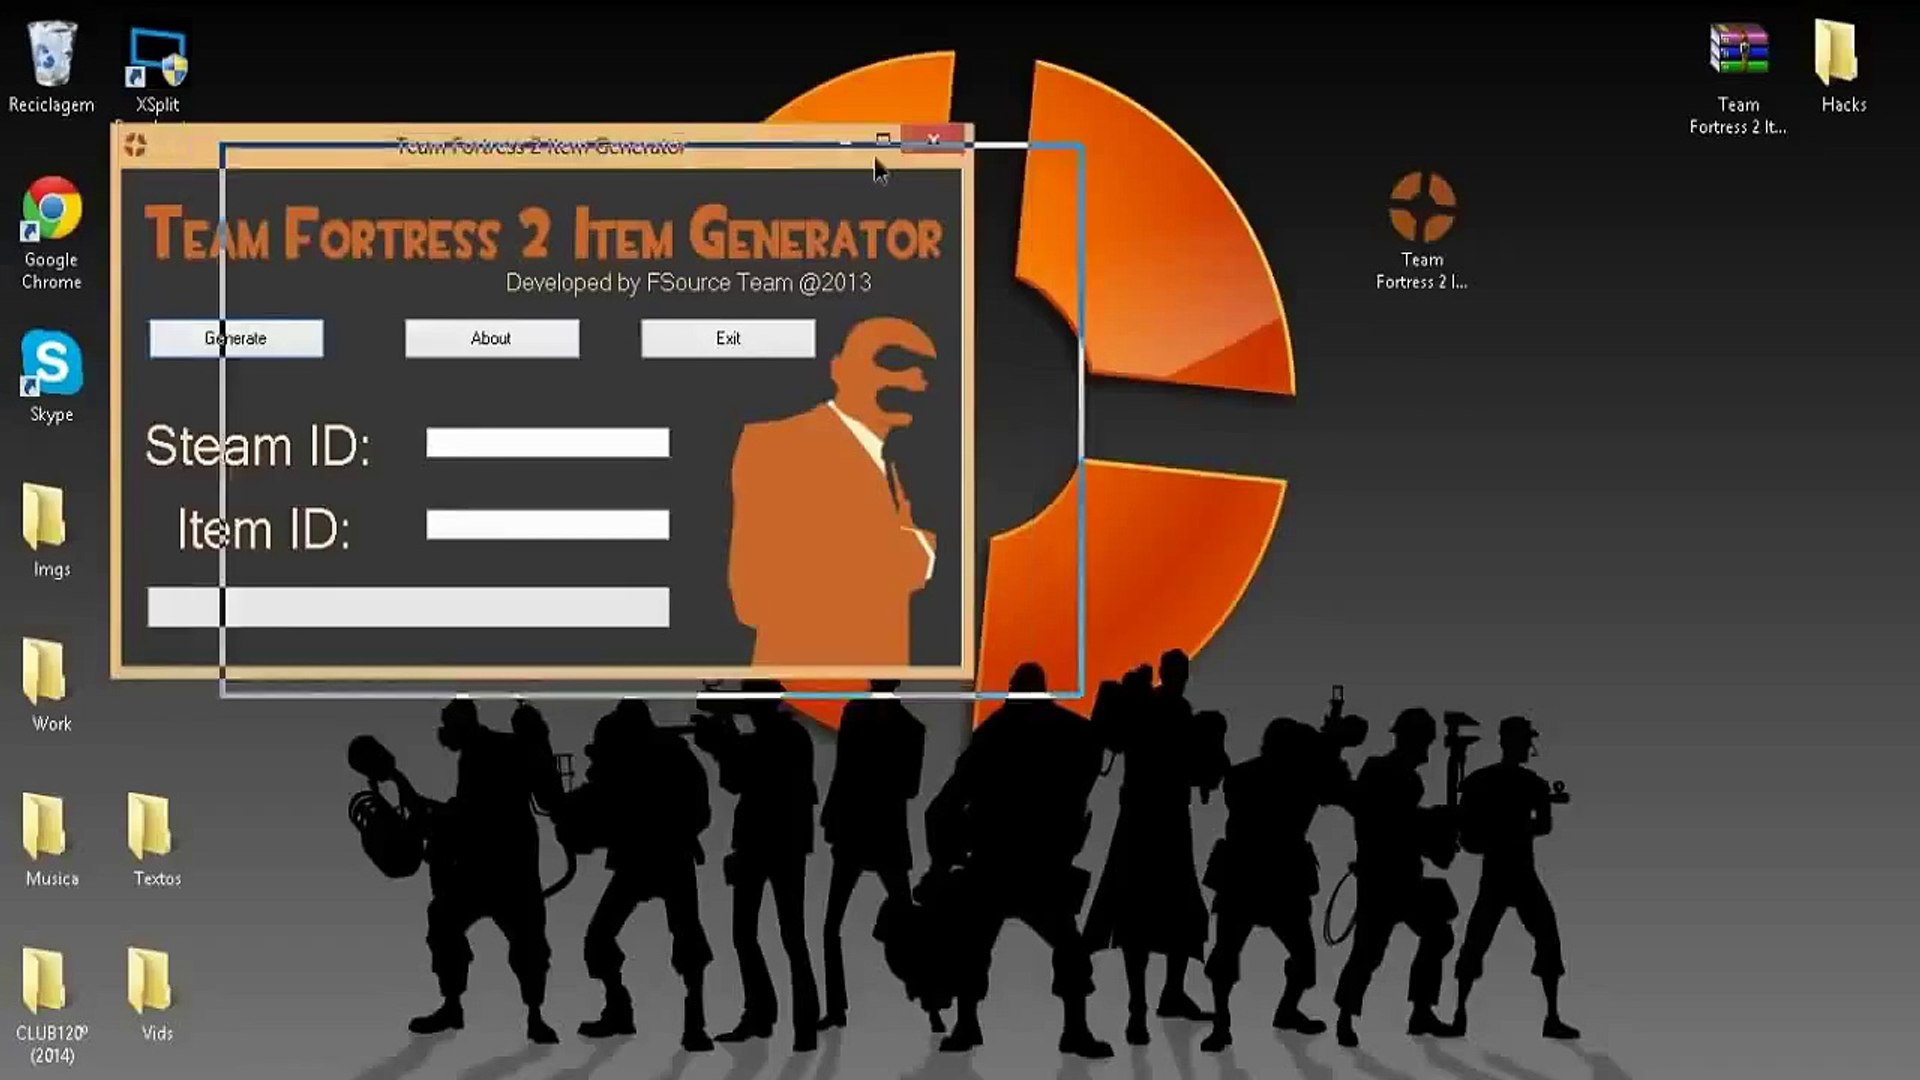 TUT] Team Fortress 2 Item Generator 2015 - video Dailymotion